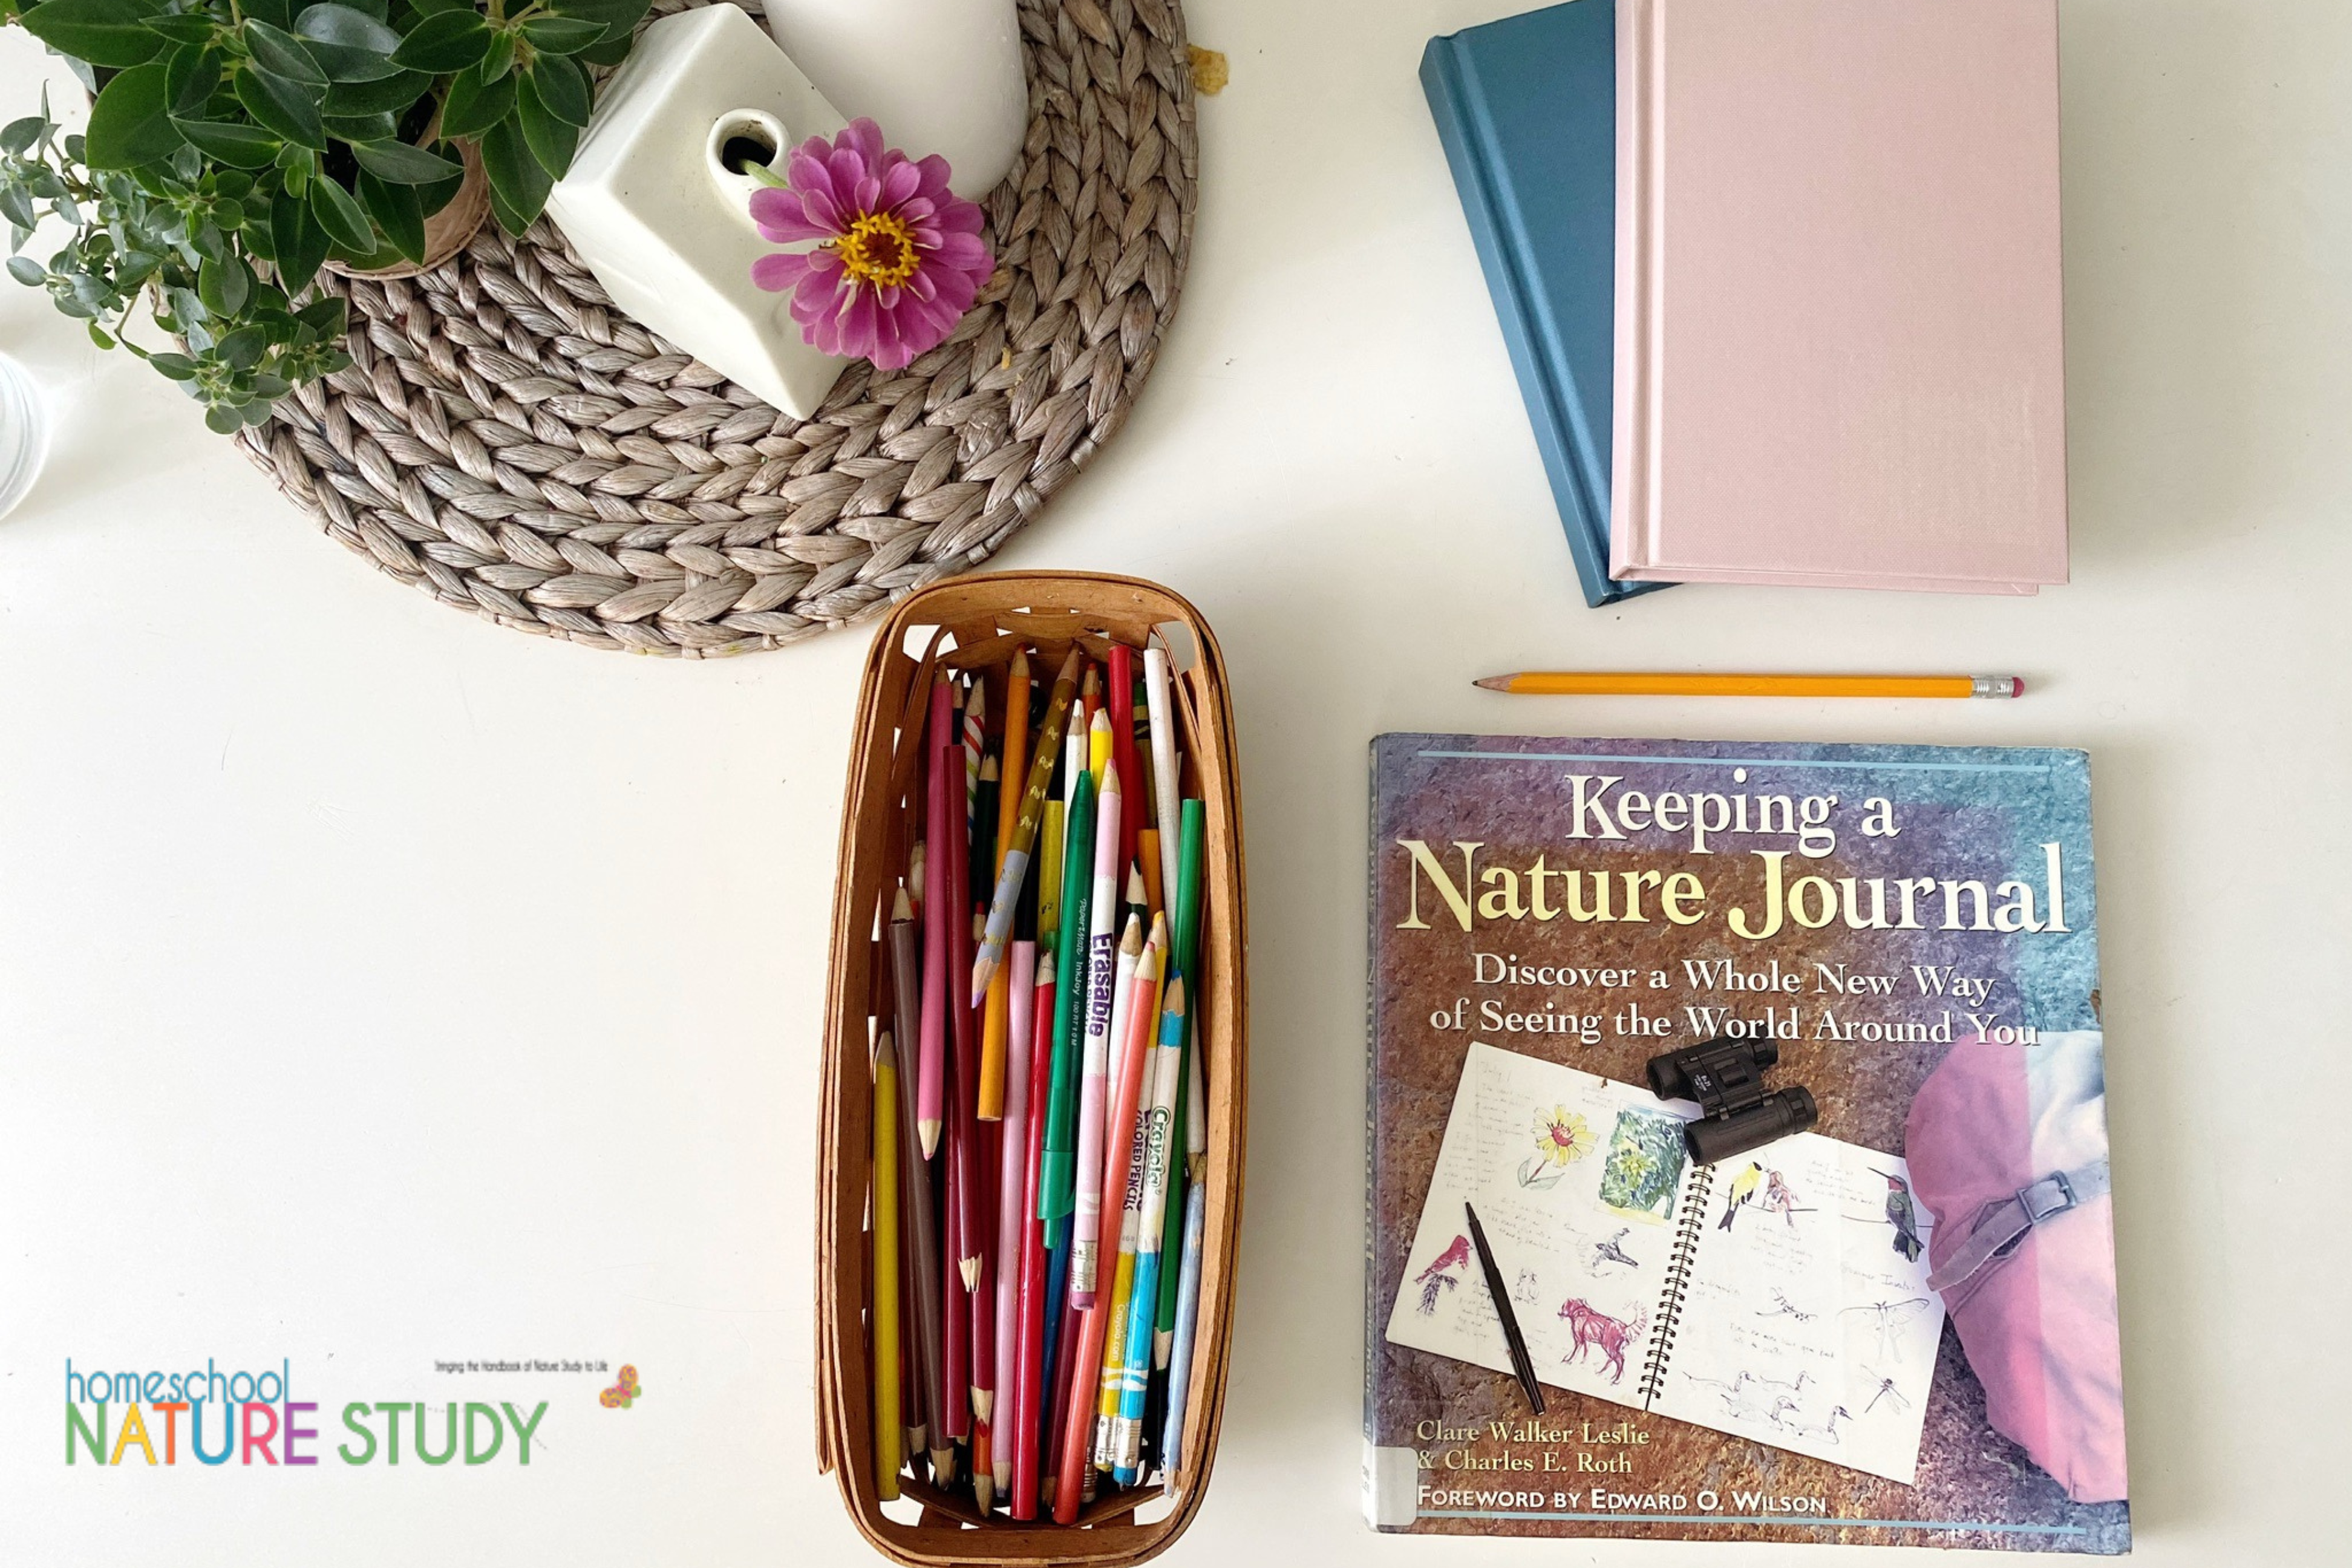 Homeschool Nature Study Resource: Keeping a Nature Journal - Review -  Homeschool Nature Study